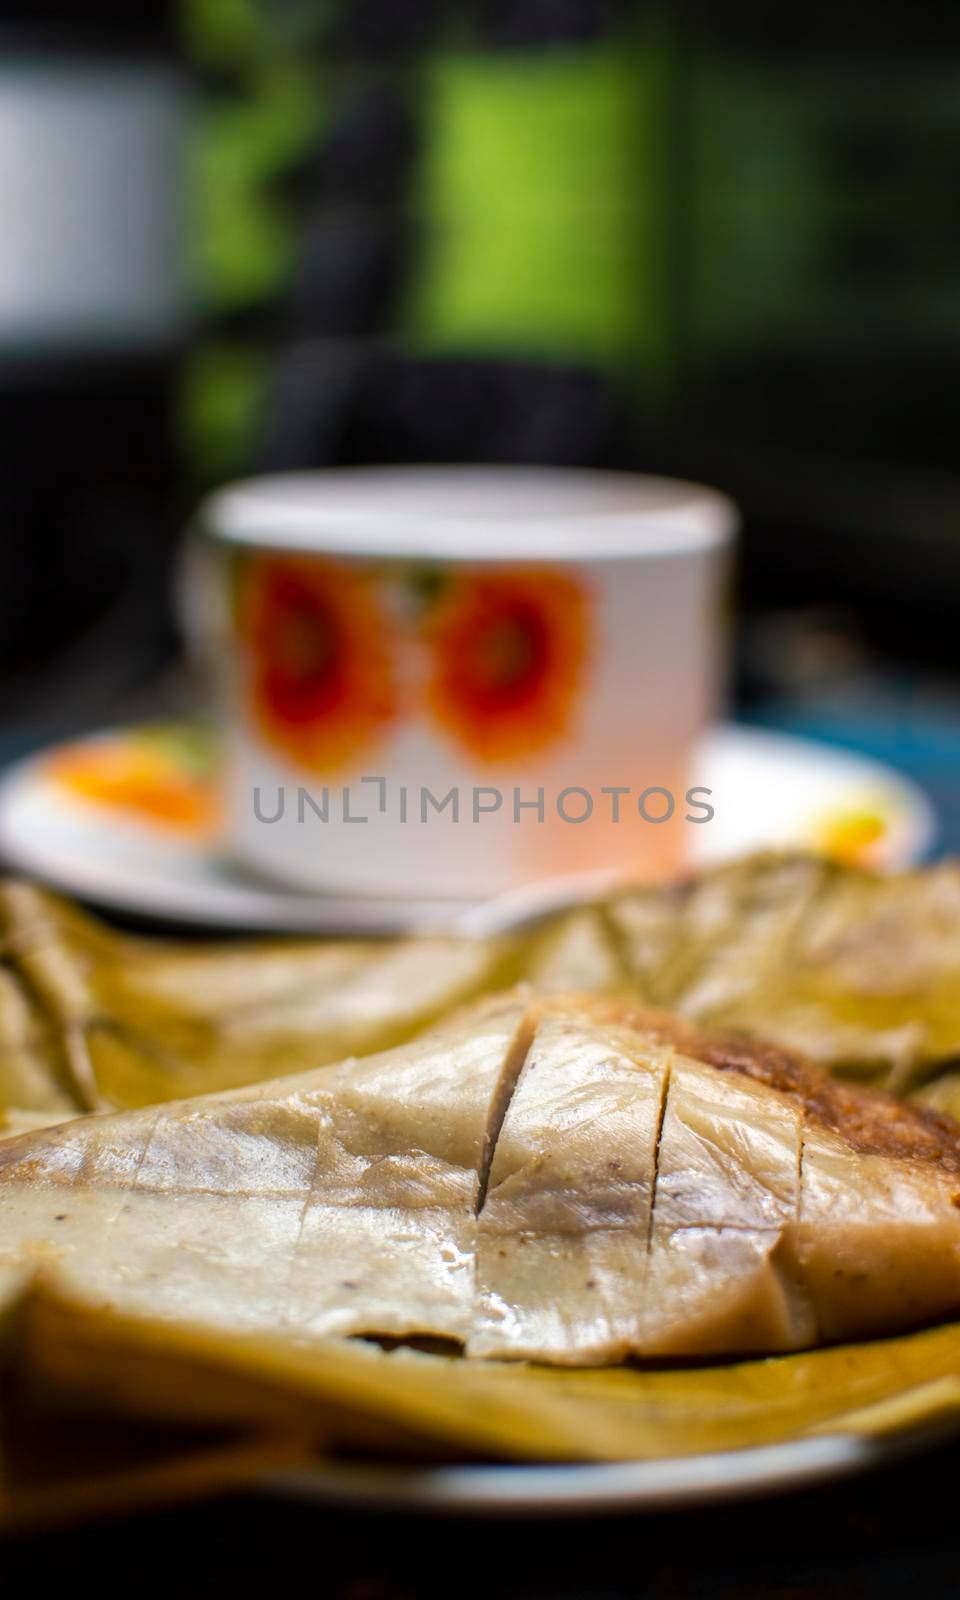 Stuffed tamale served on wooden table, stuffed tamale on banana leaf served on wooden table, typical nicaragua food